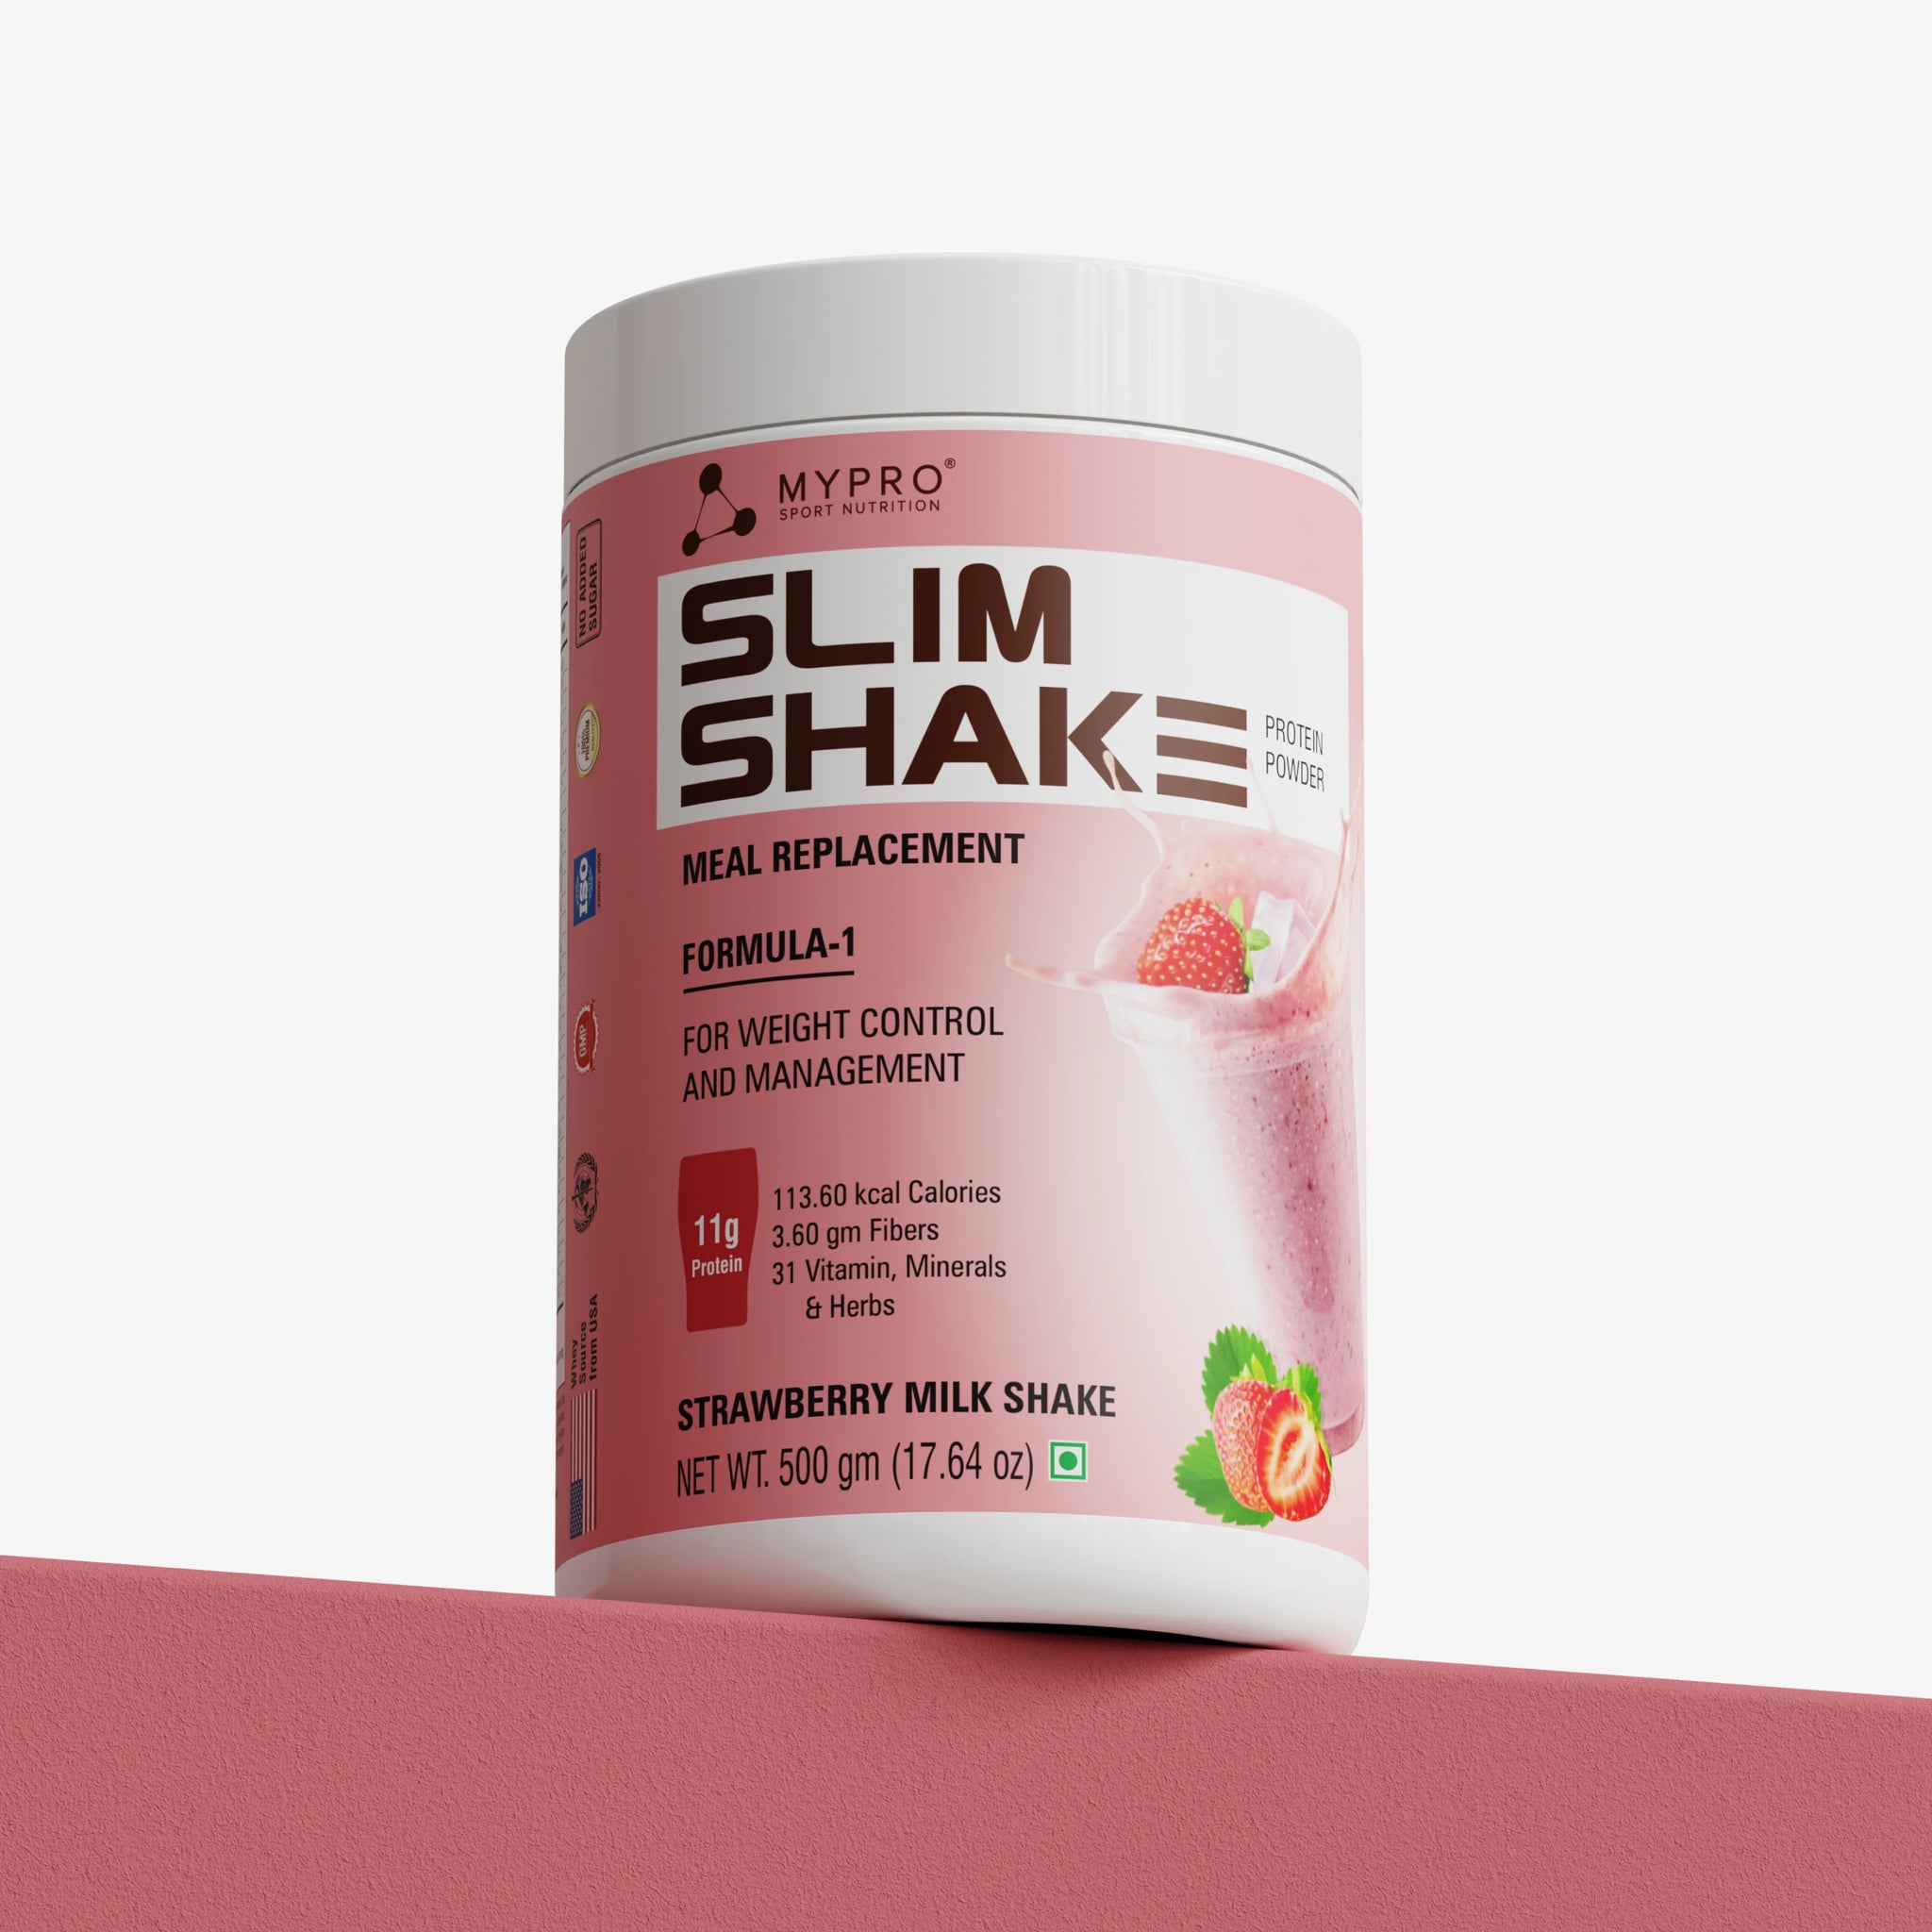 Slim Shake Meal Replacement Shake